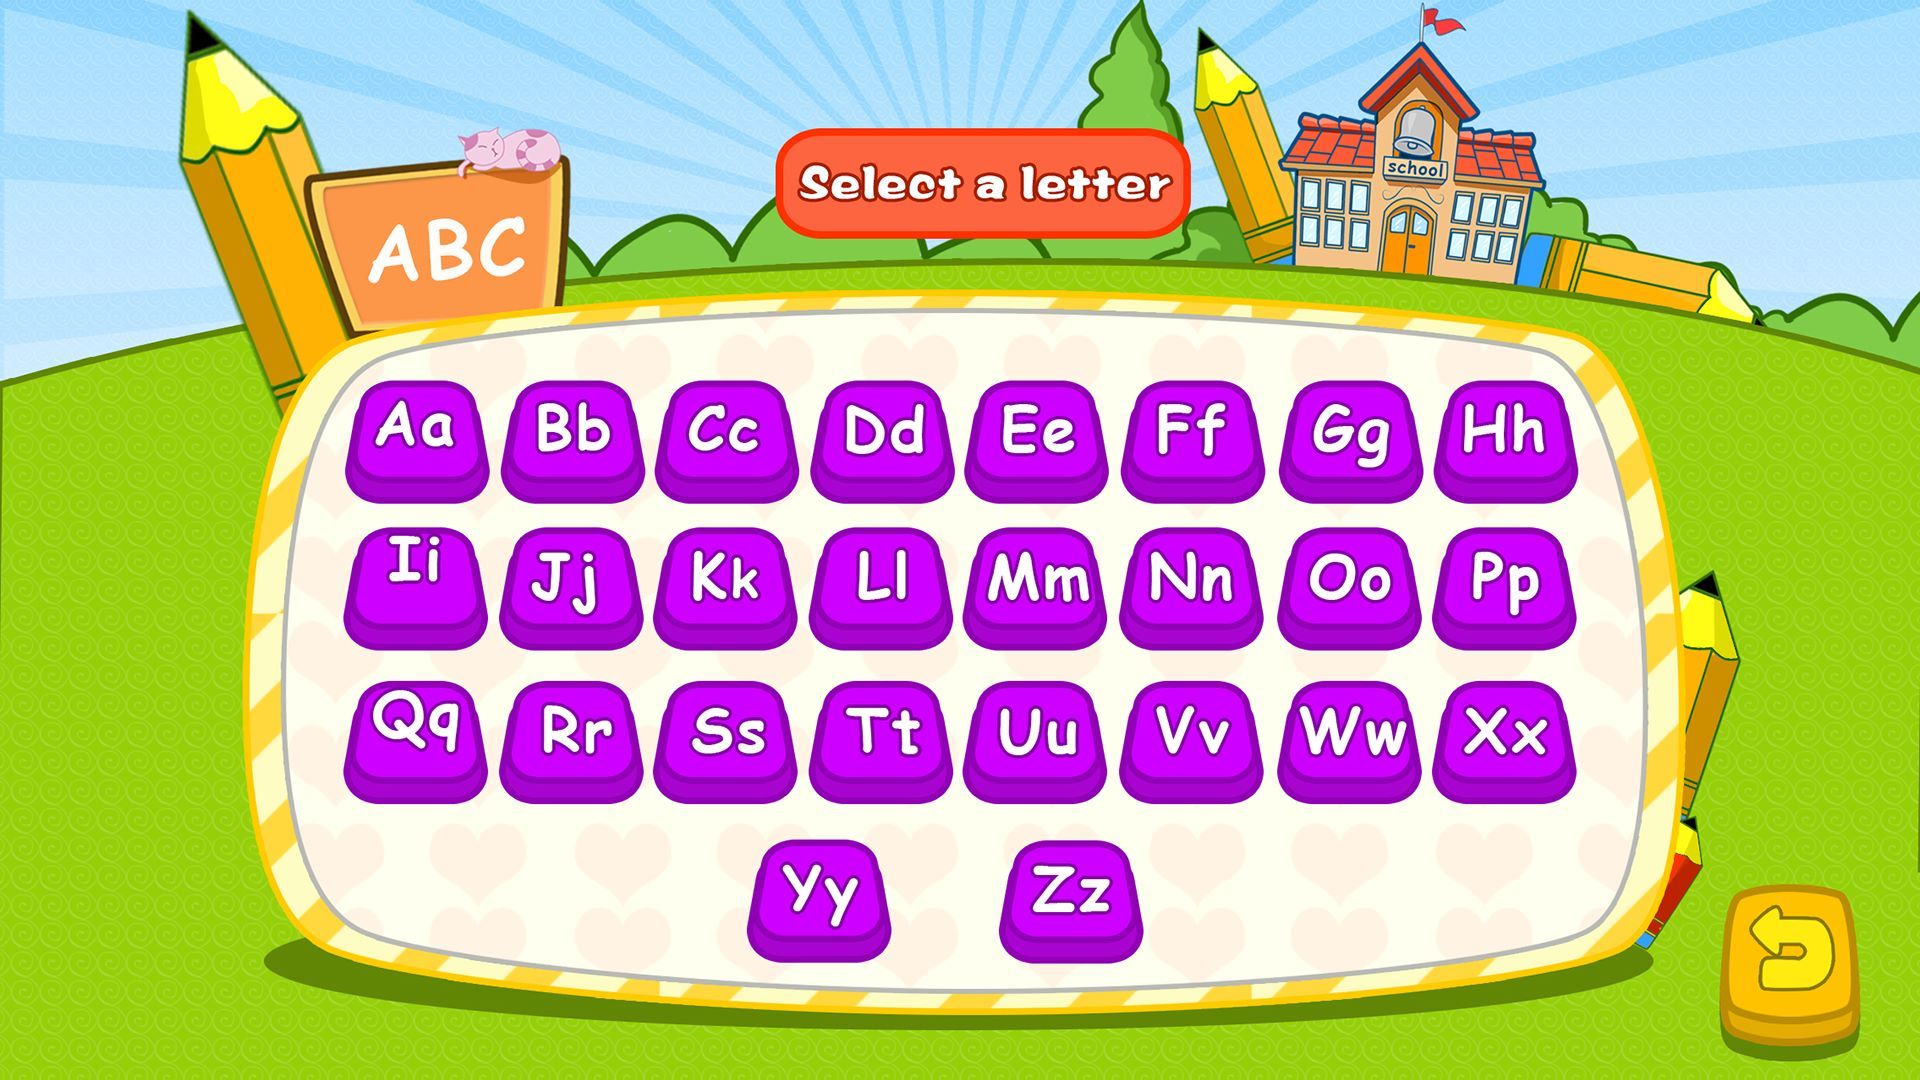 Preschool alphabet English writing - pre-kindergarten schooling